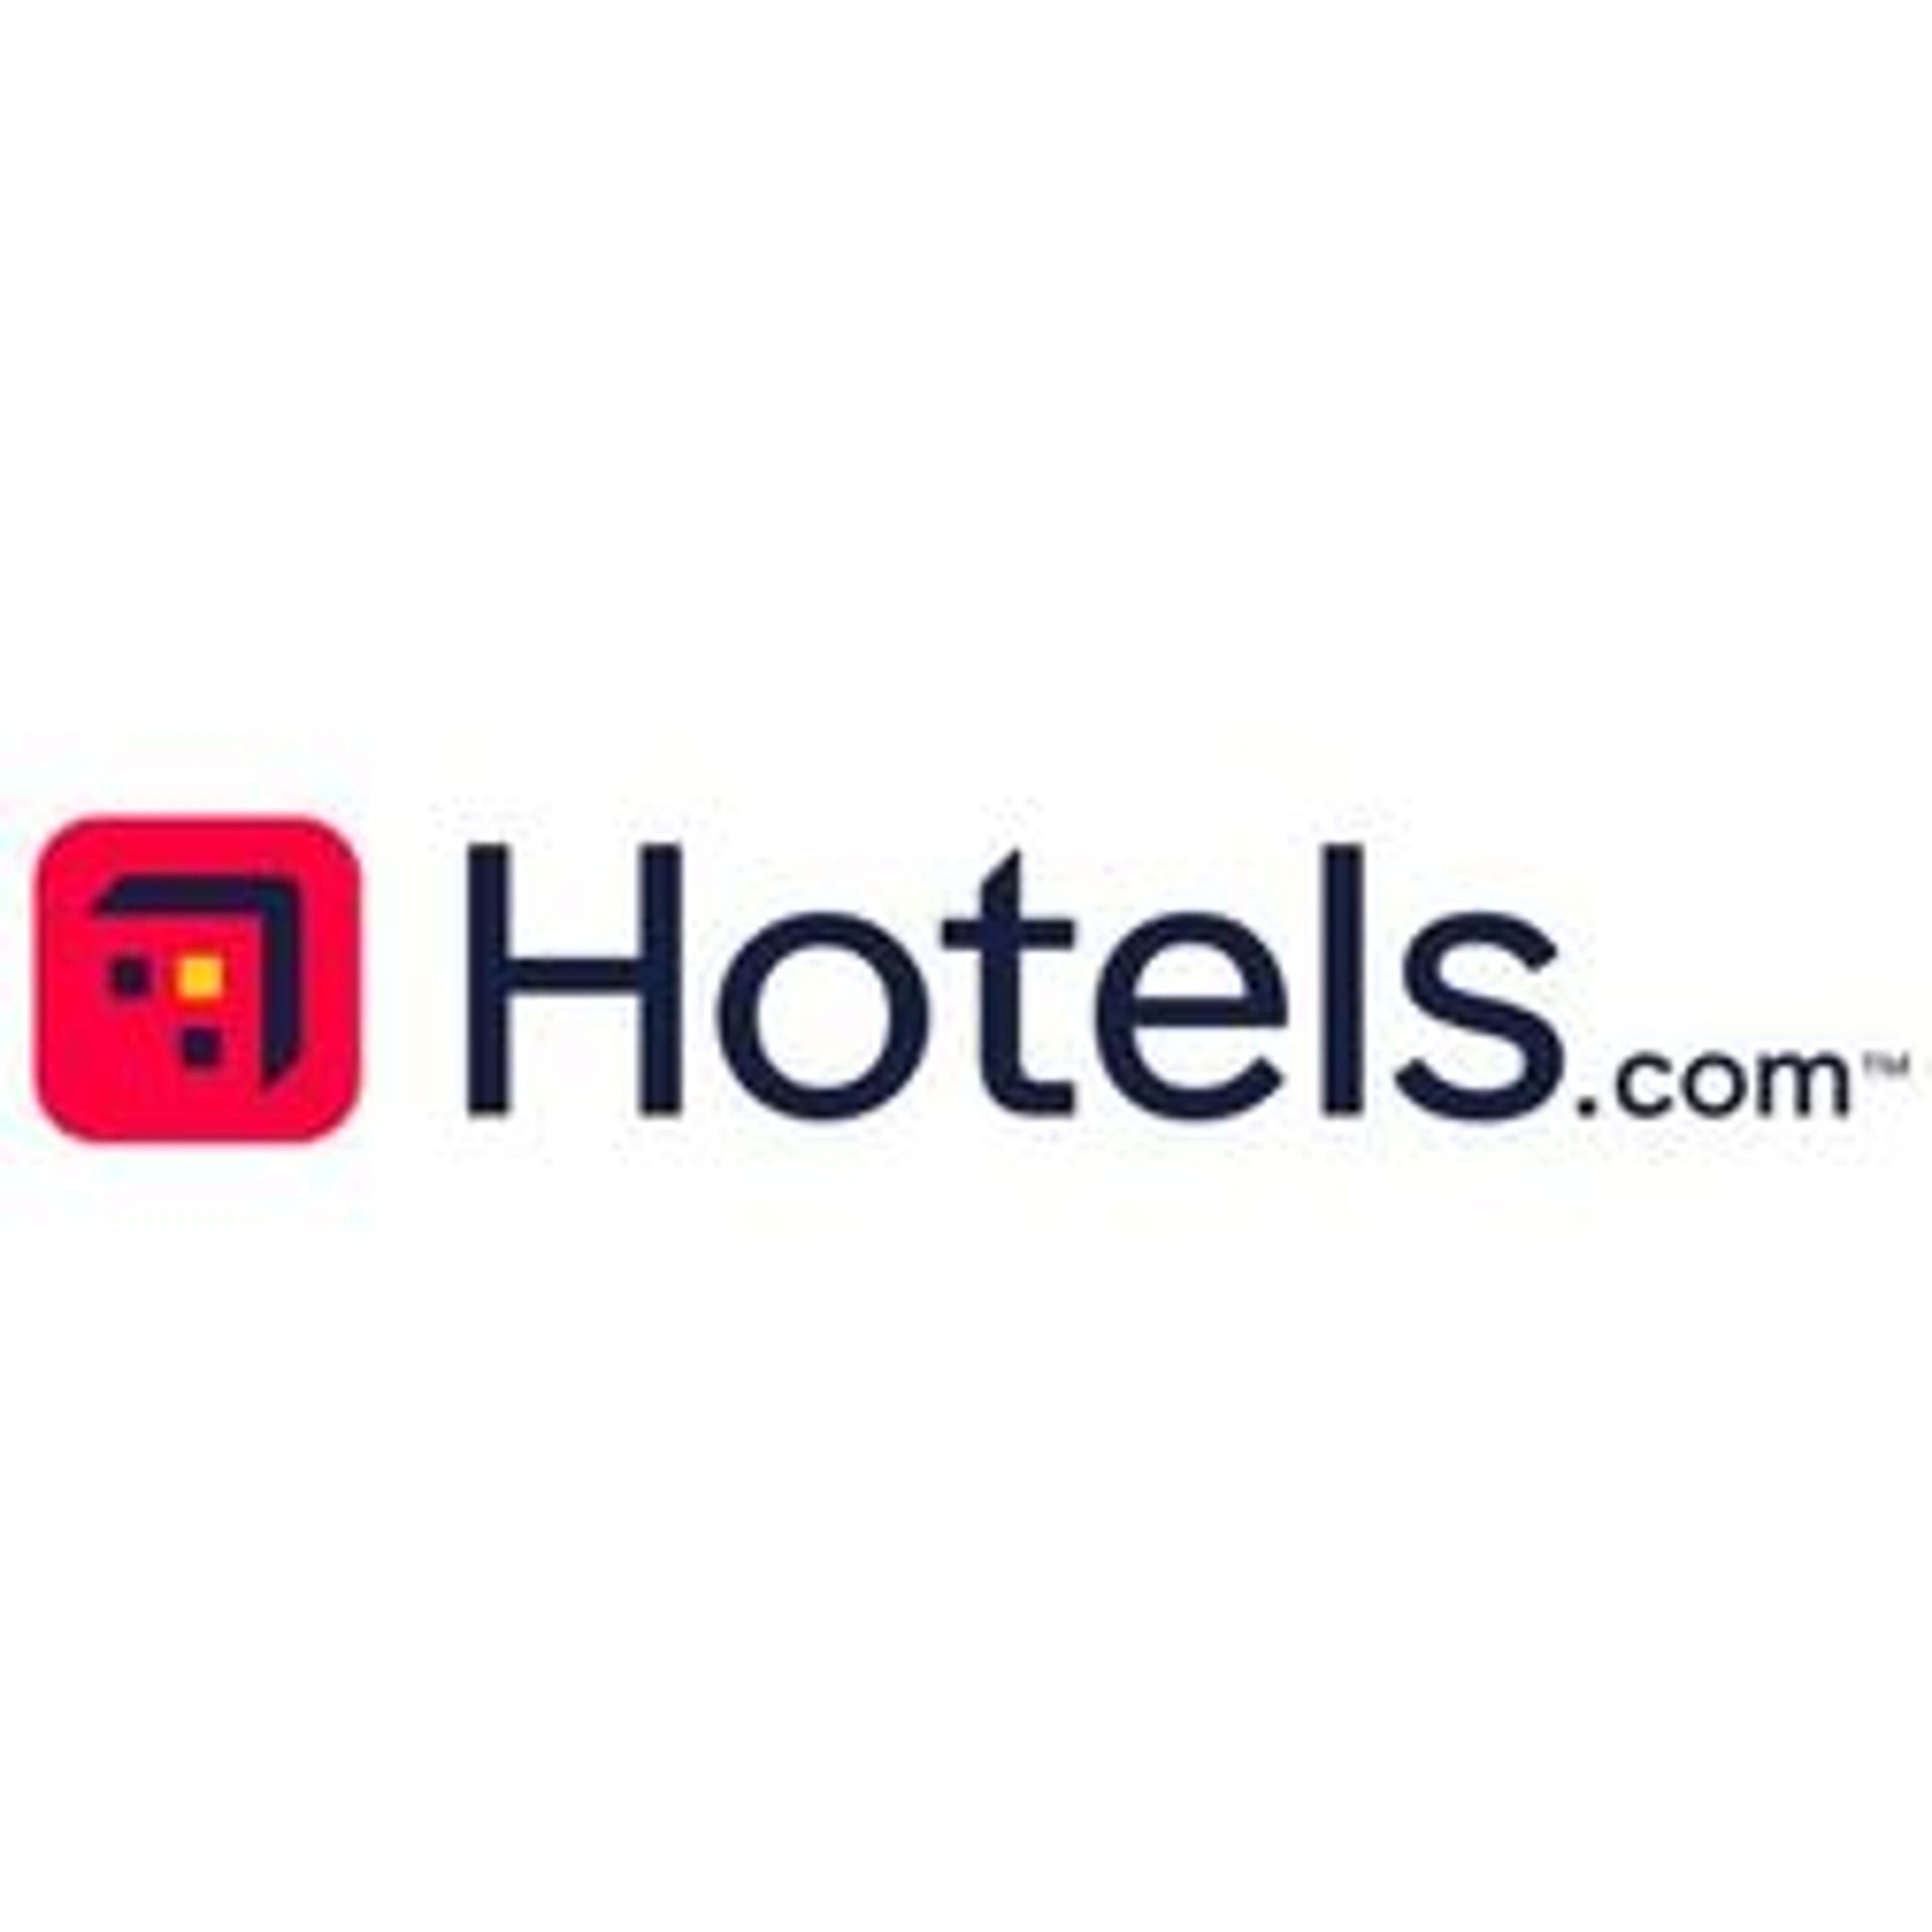  Hotels.com 